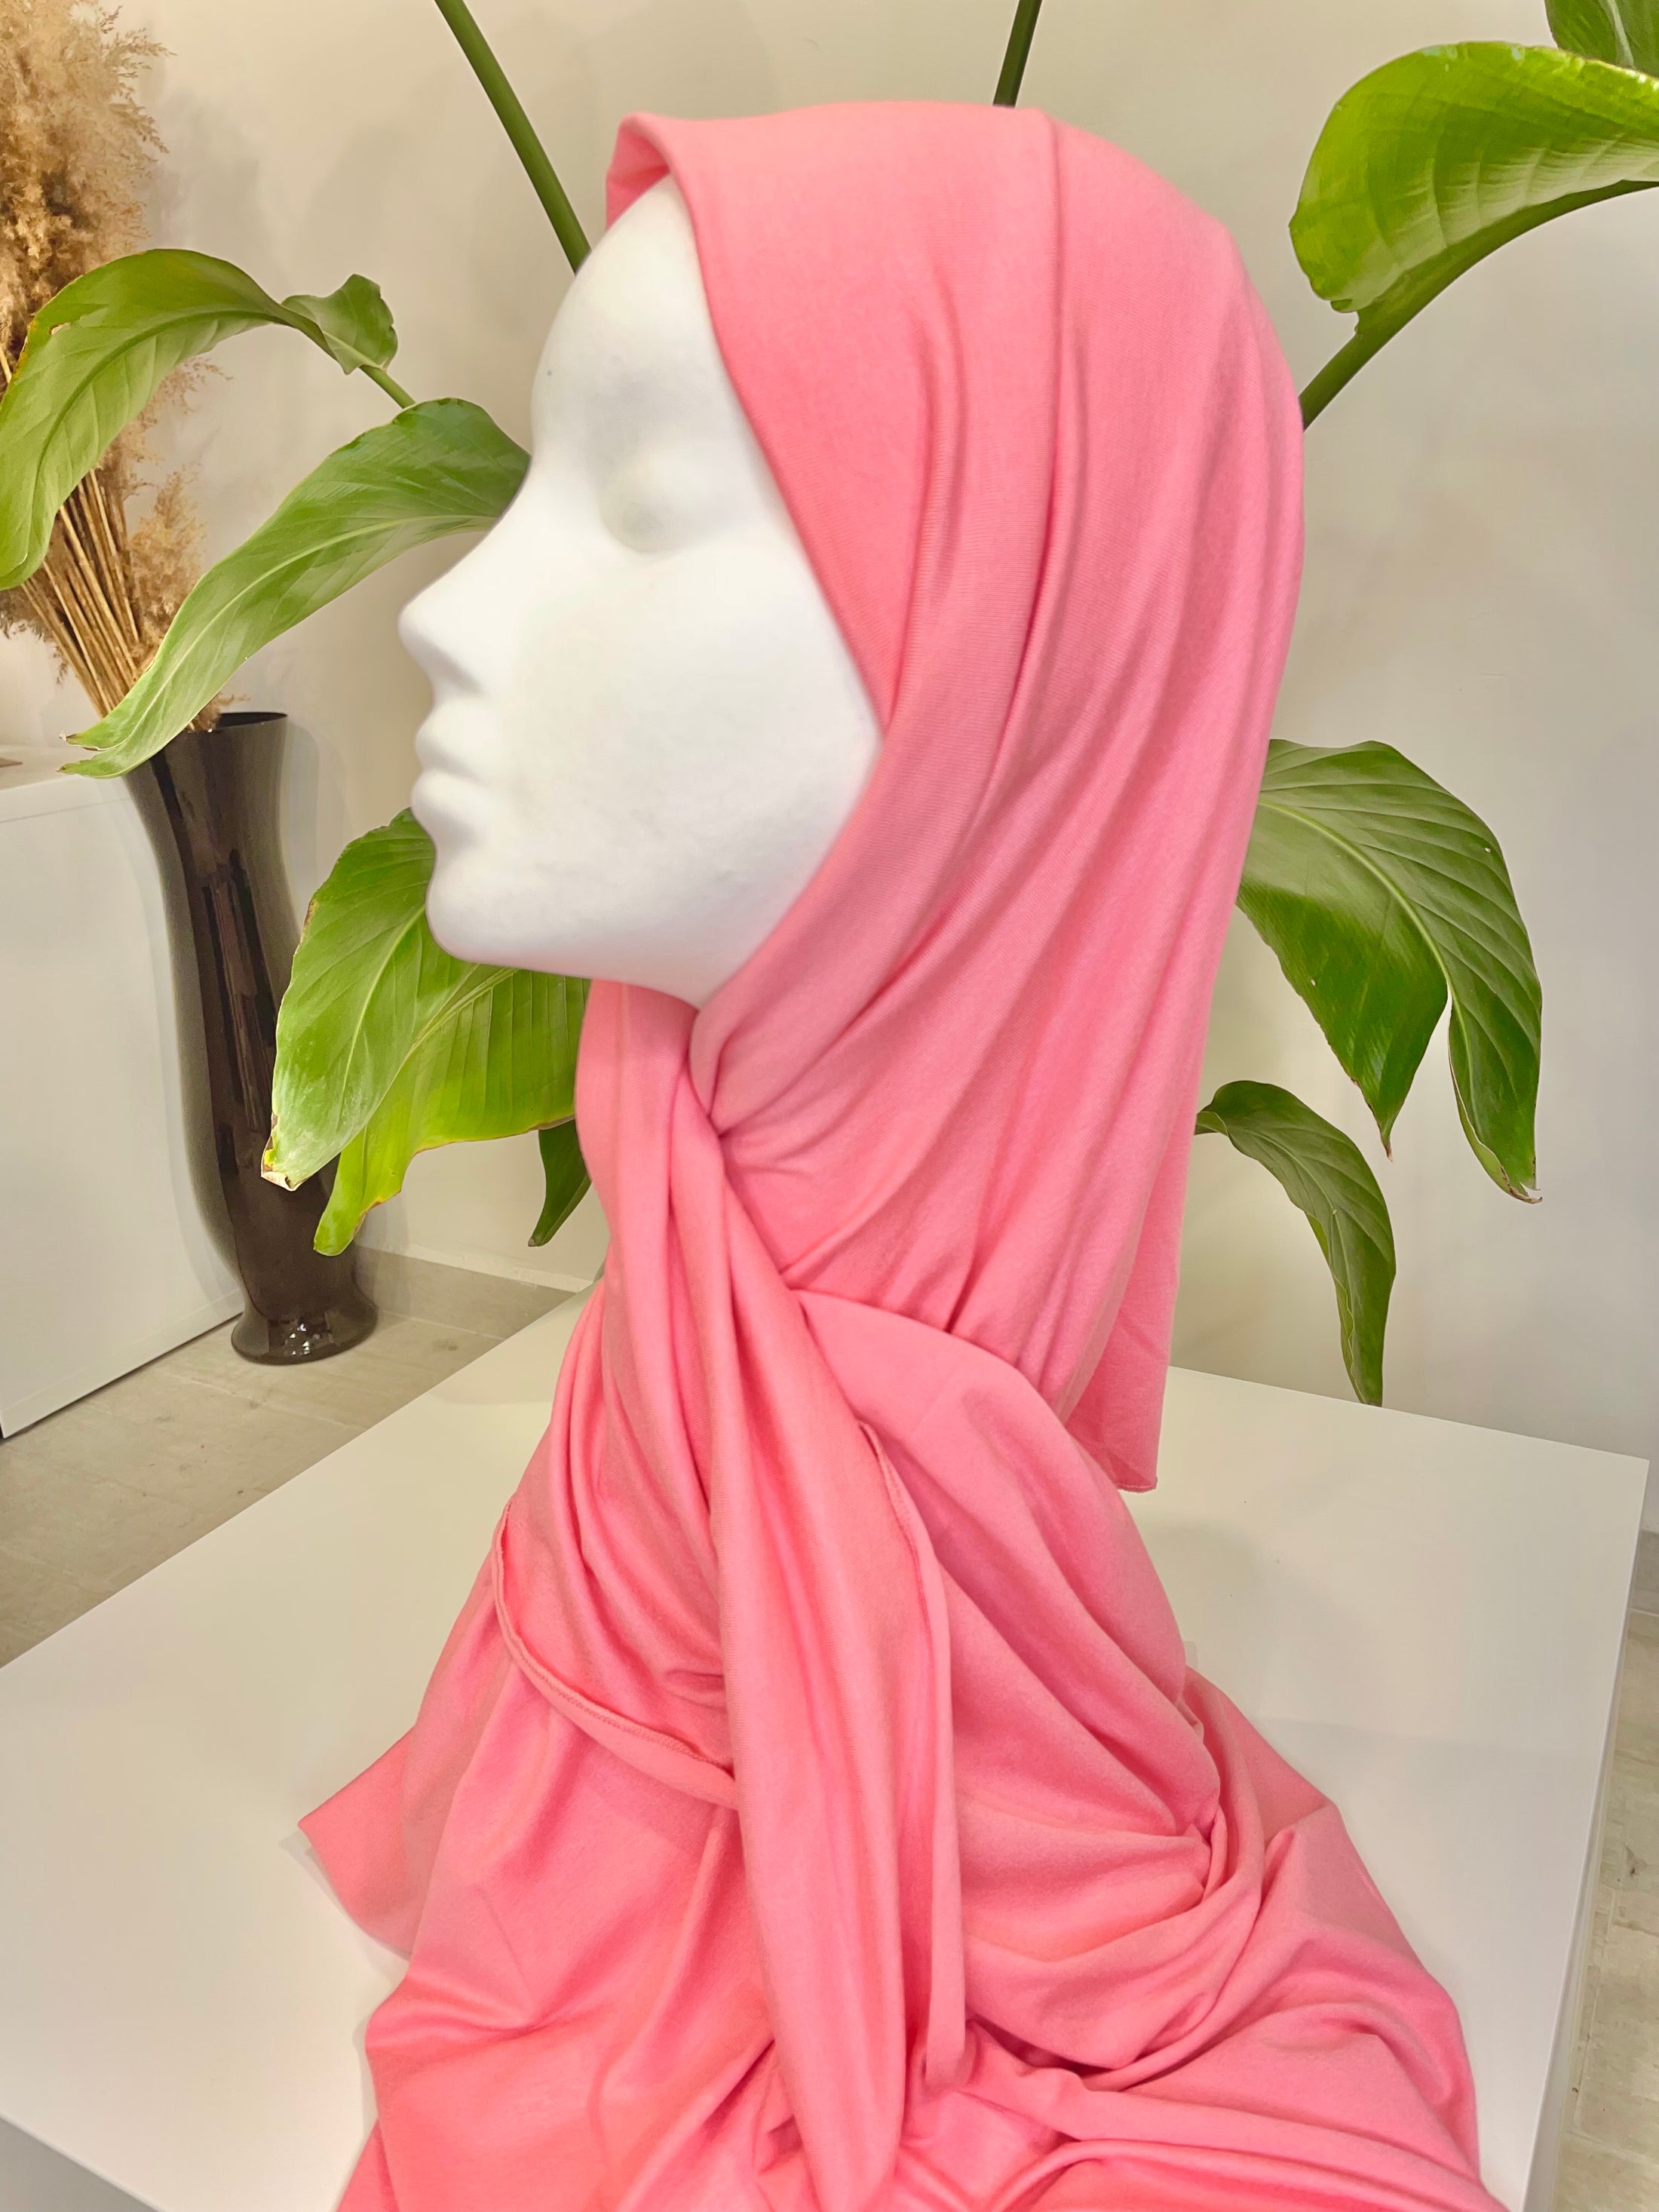 Hijab Jersey rosa flamingo-orlo FlatlockHijab, chador, velo, turbante, foulard, copricapo, musulmano, islamico, sciarpa, 